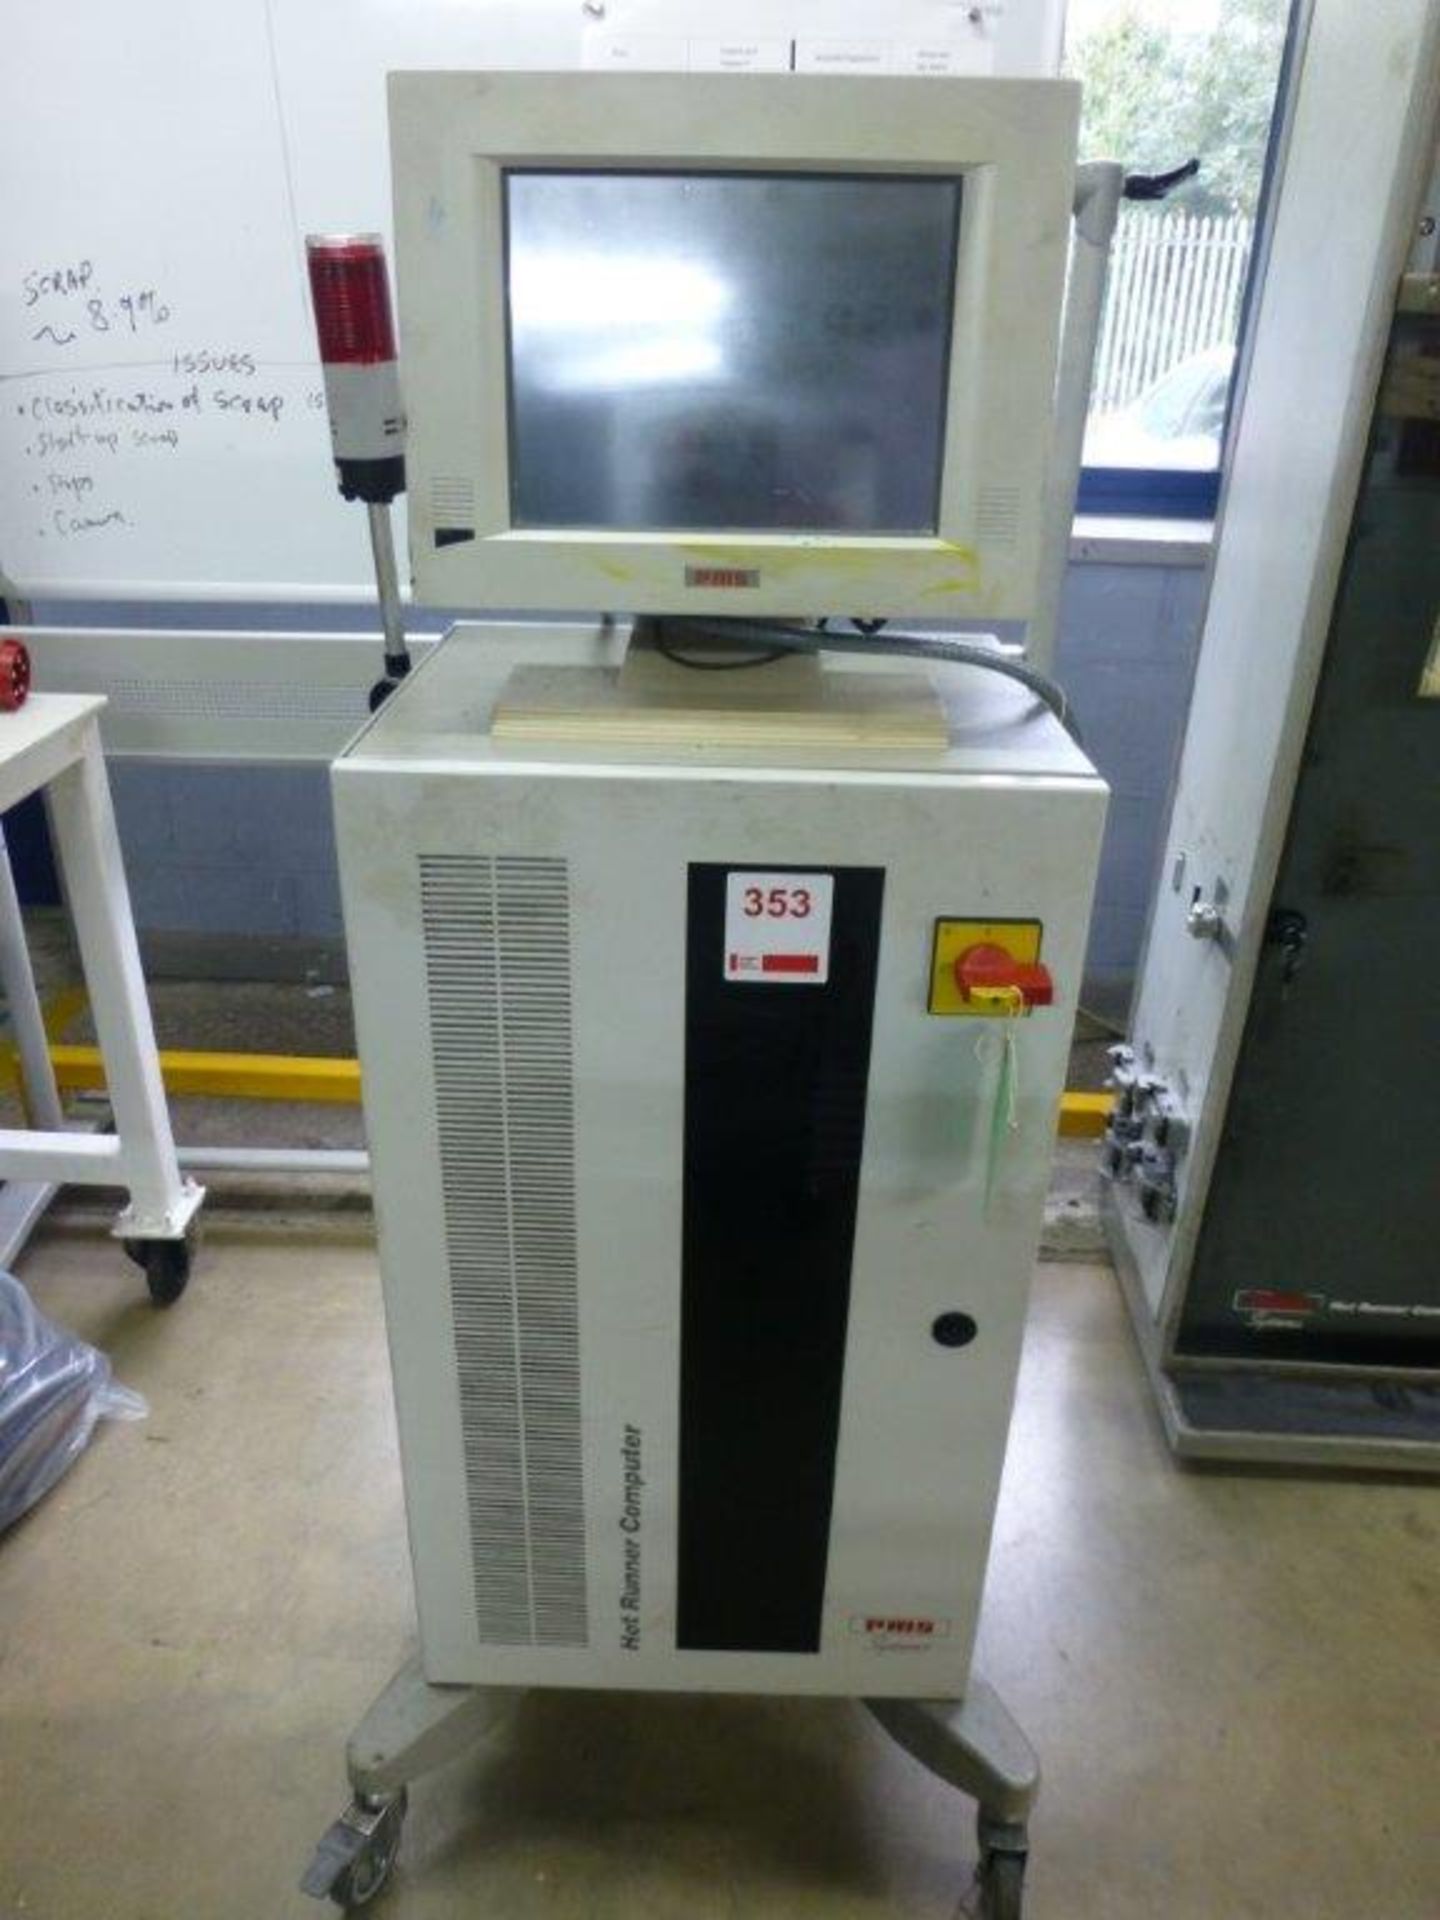 PMS Sytems K20-15 hot runner computer, serial No 008651-001 (2004)